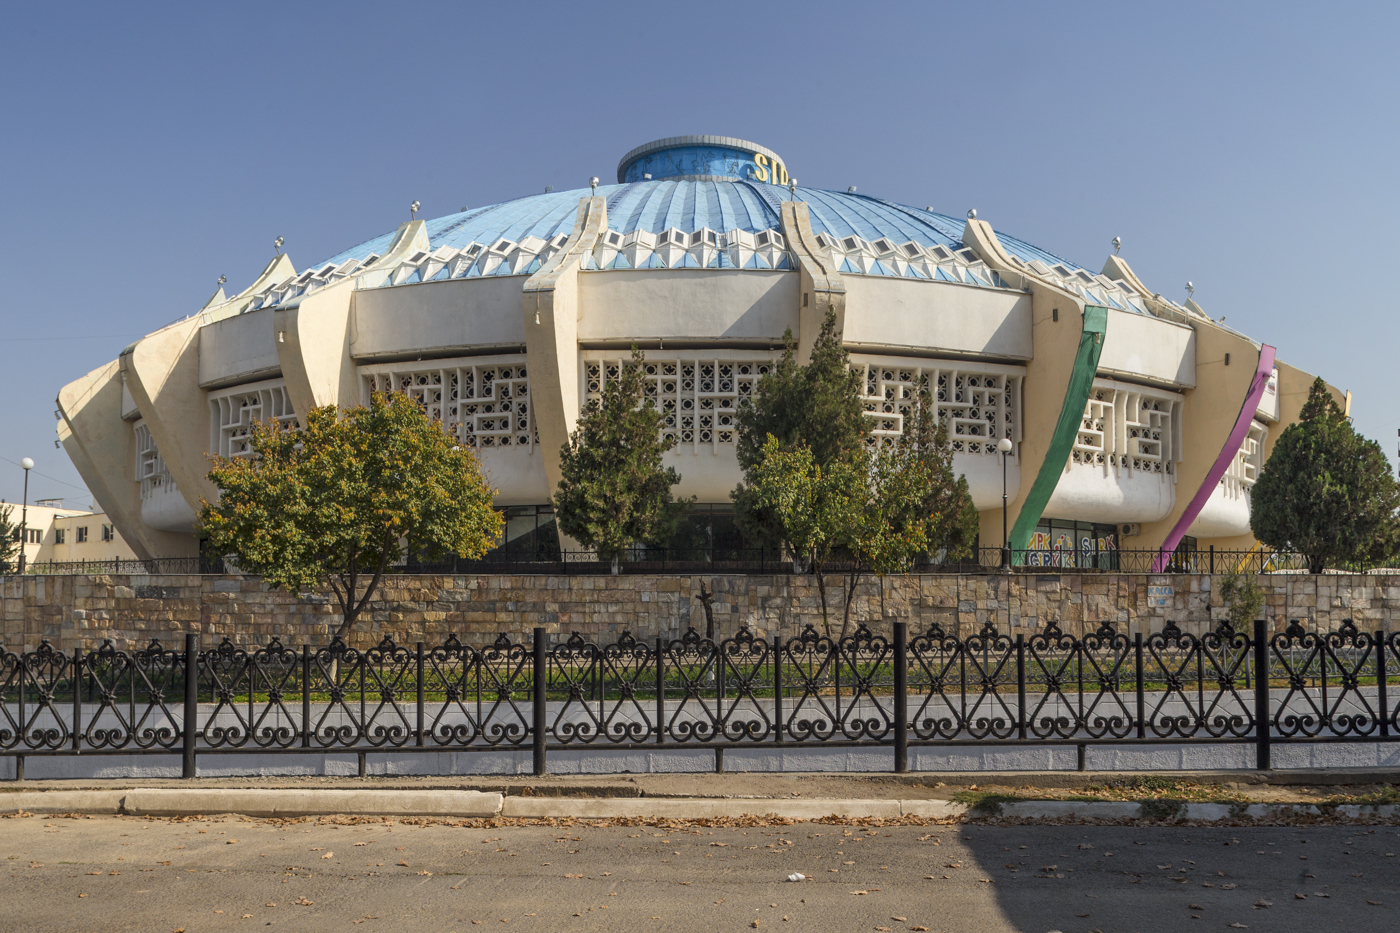 Circus, by G. Aleksandrovich and G. Masyagin (1976). Tashkent, Uzbekistan. Photo: Roberto Conte